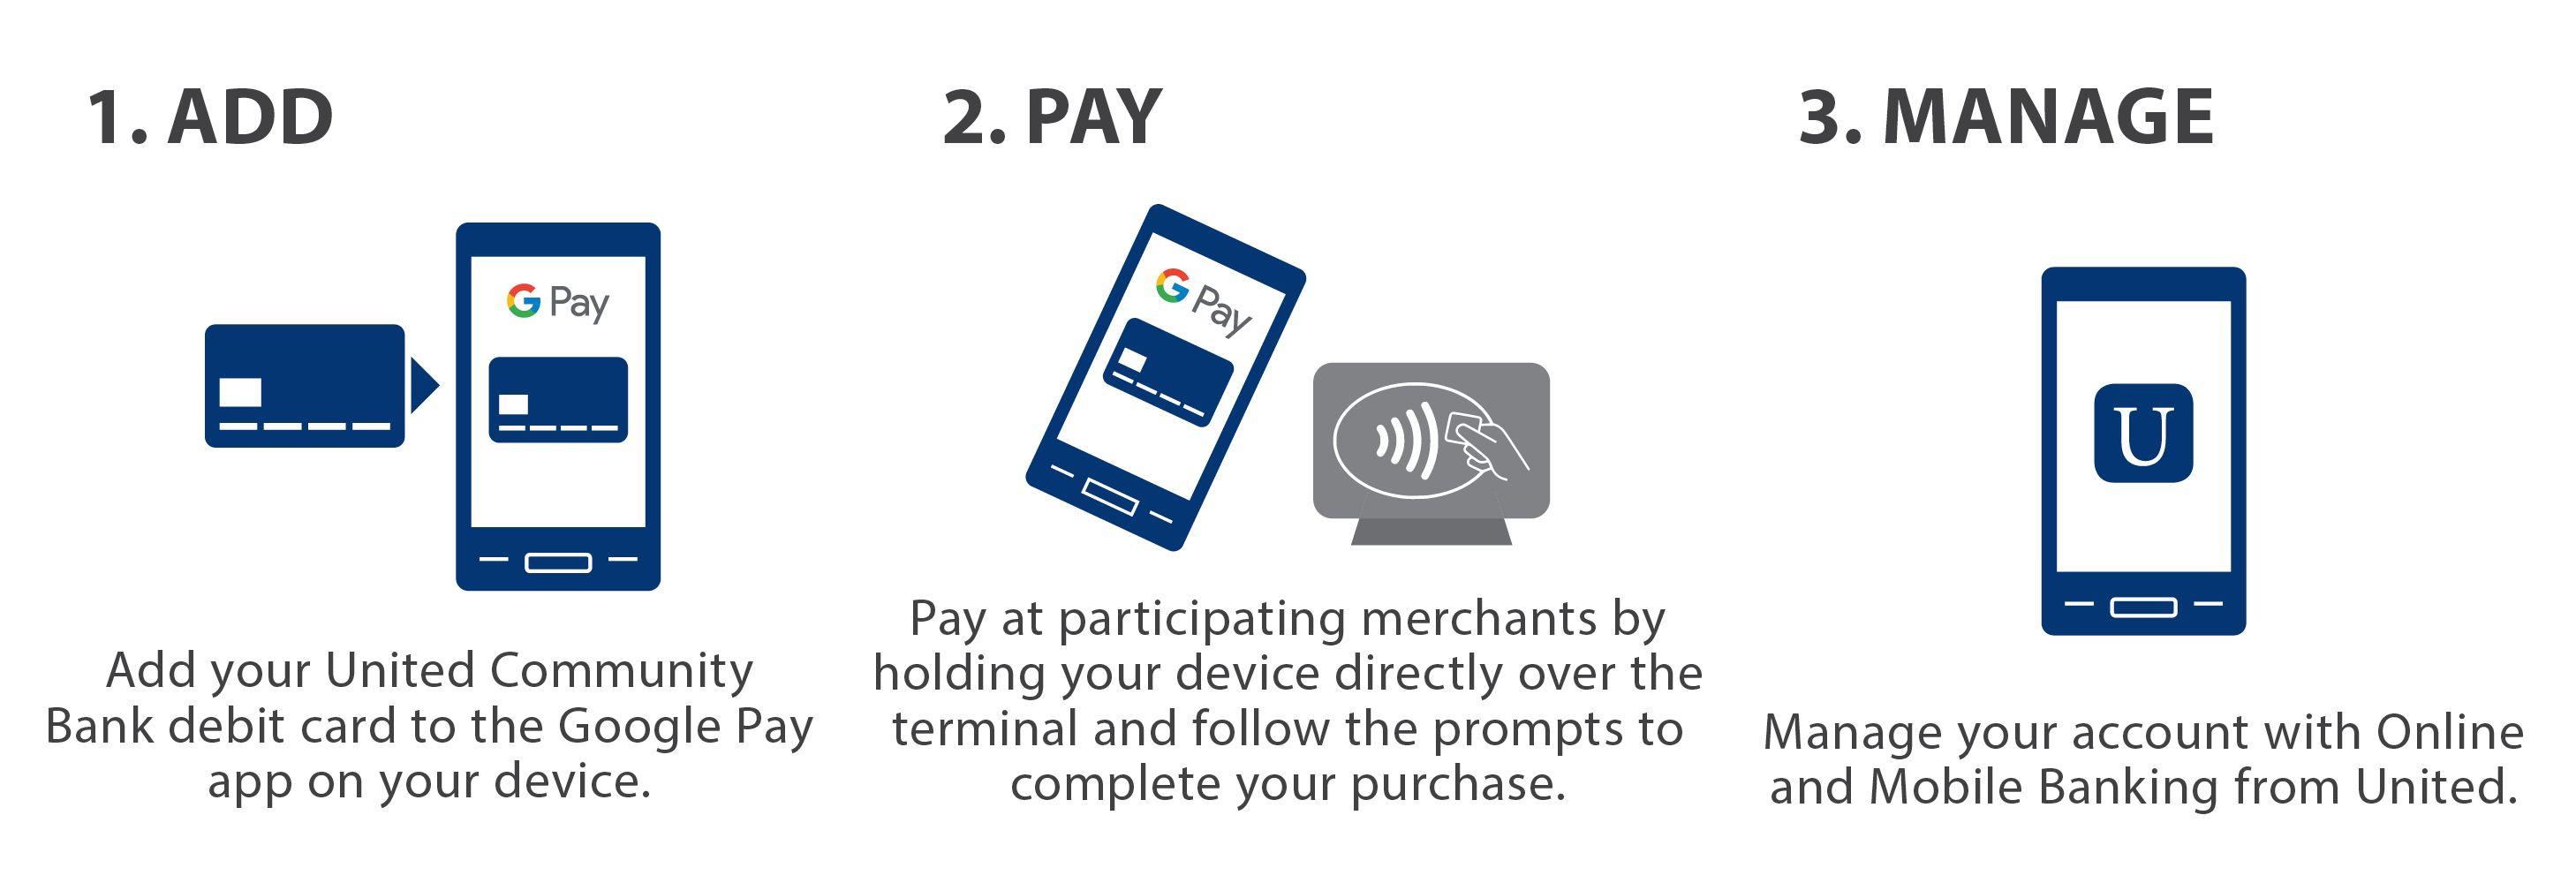 Mobile Wallet Logo - Google Pay United Mobile Wallet | Online Services | UCBI